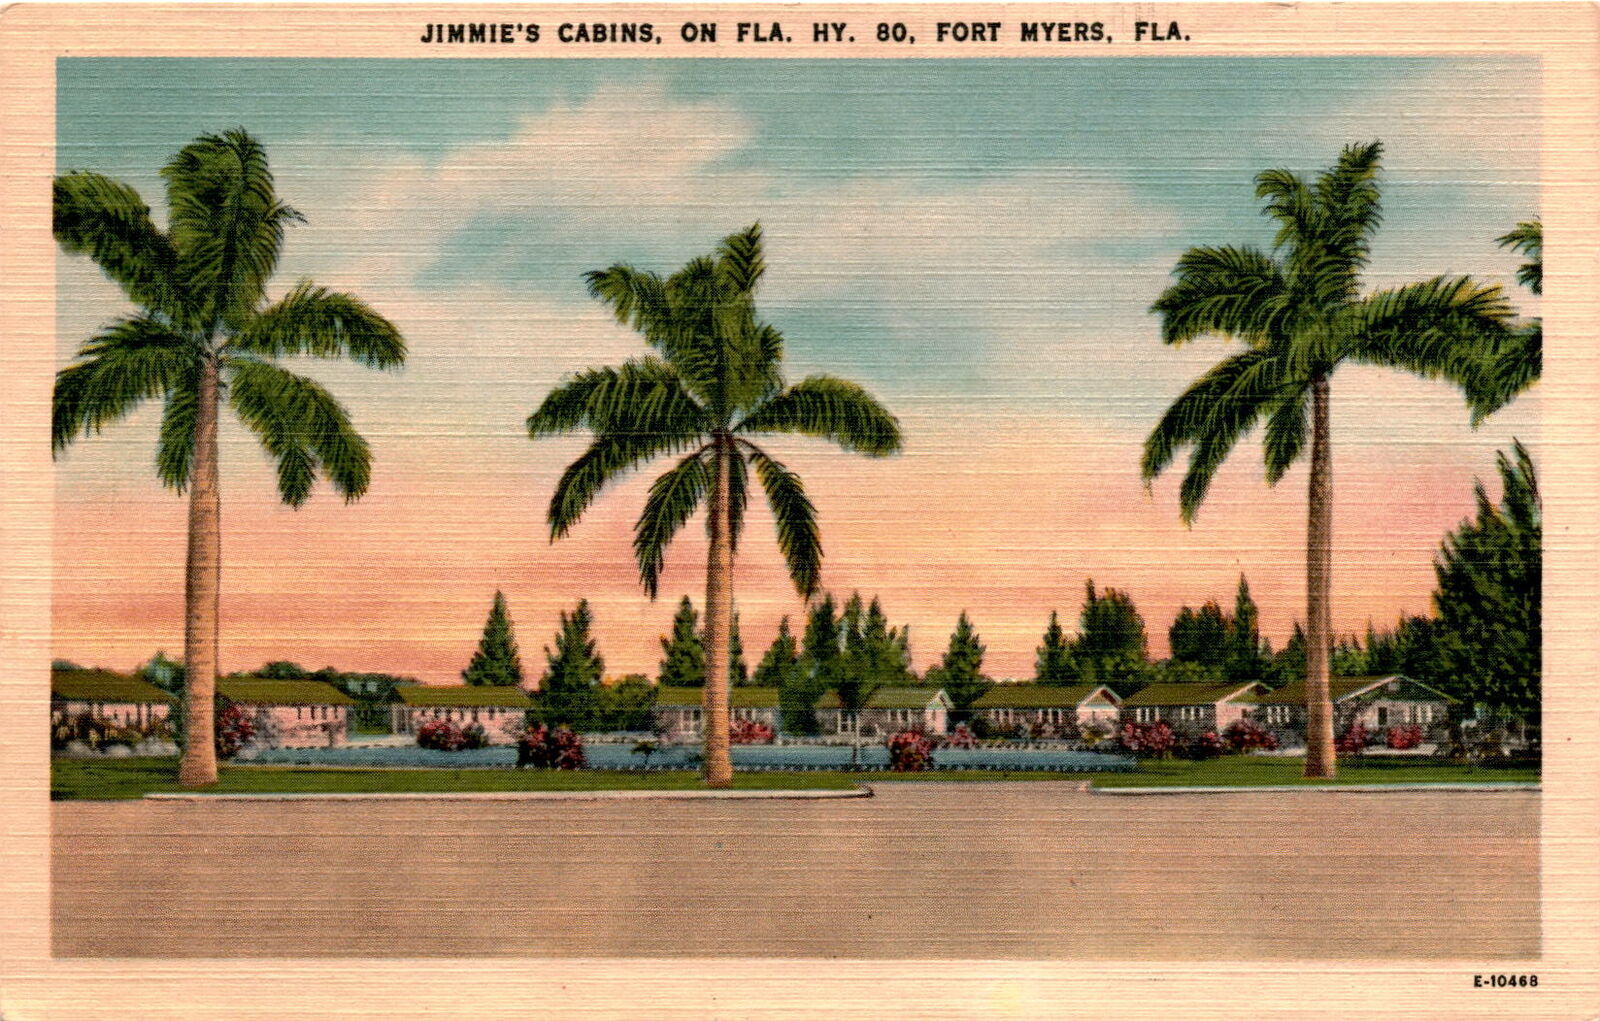 Jimmie's Cabins, Fort Myers, Florida, Florida Highway 80, Mr. Jim Postcard